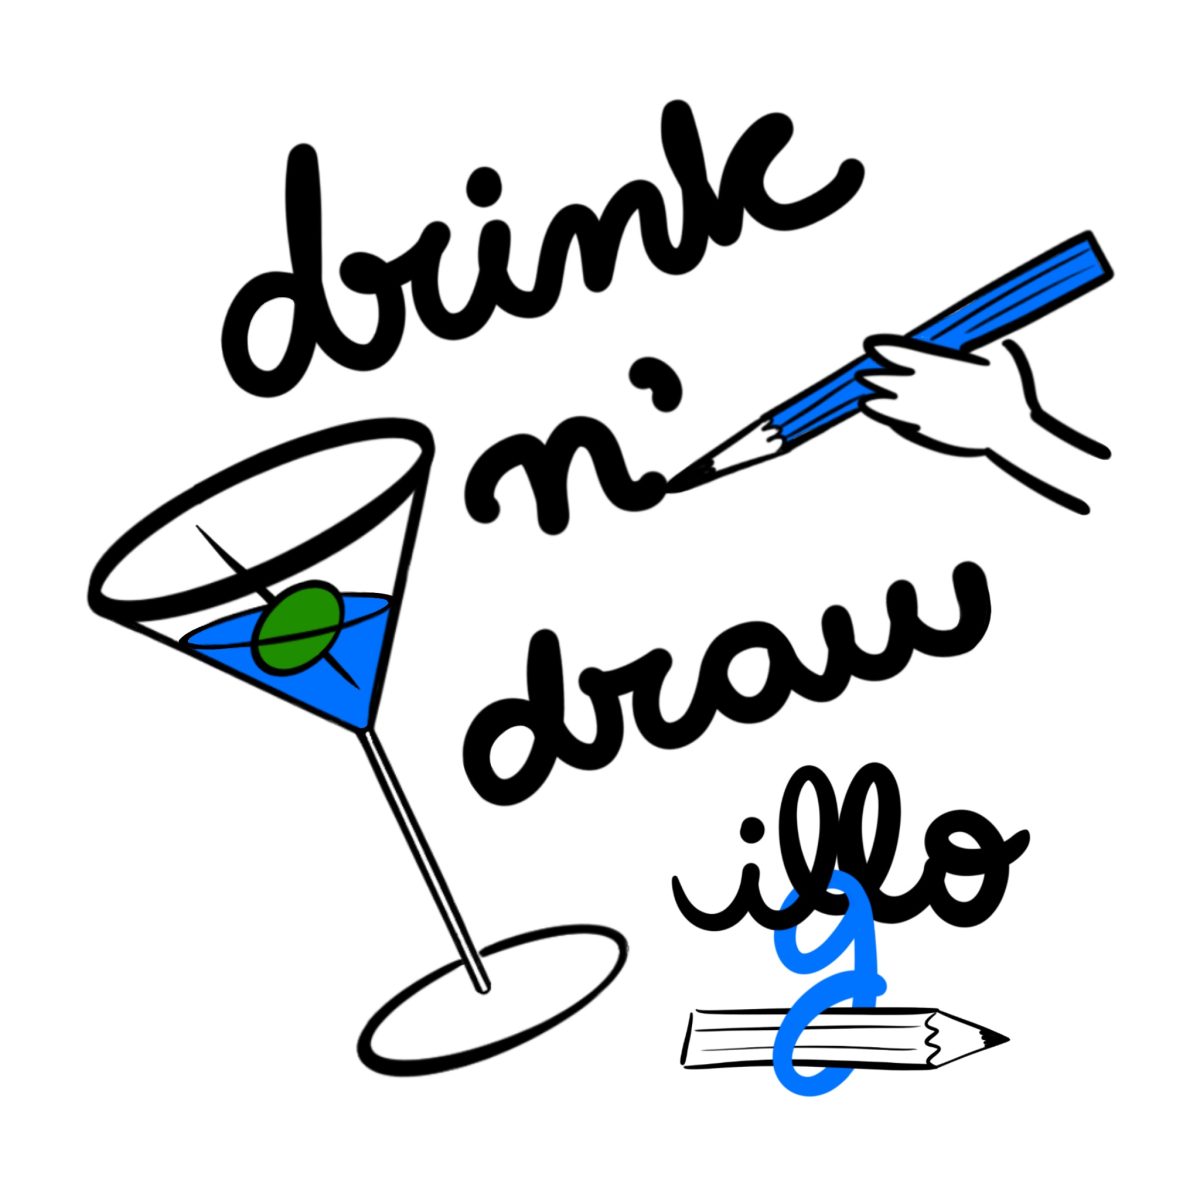 Cardiff illustrator meet-up / Drink & Draw / Illustration Club